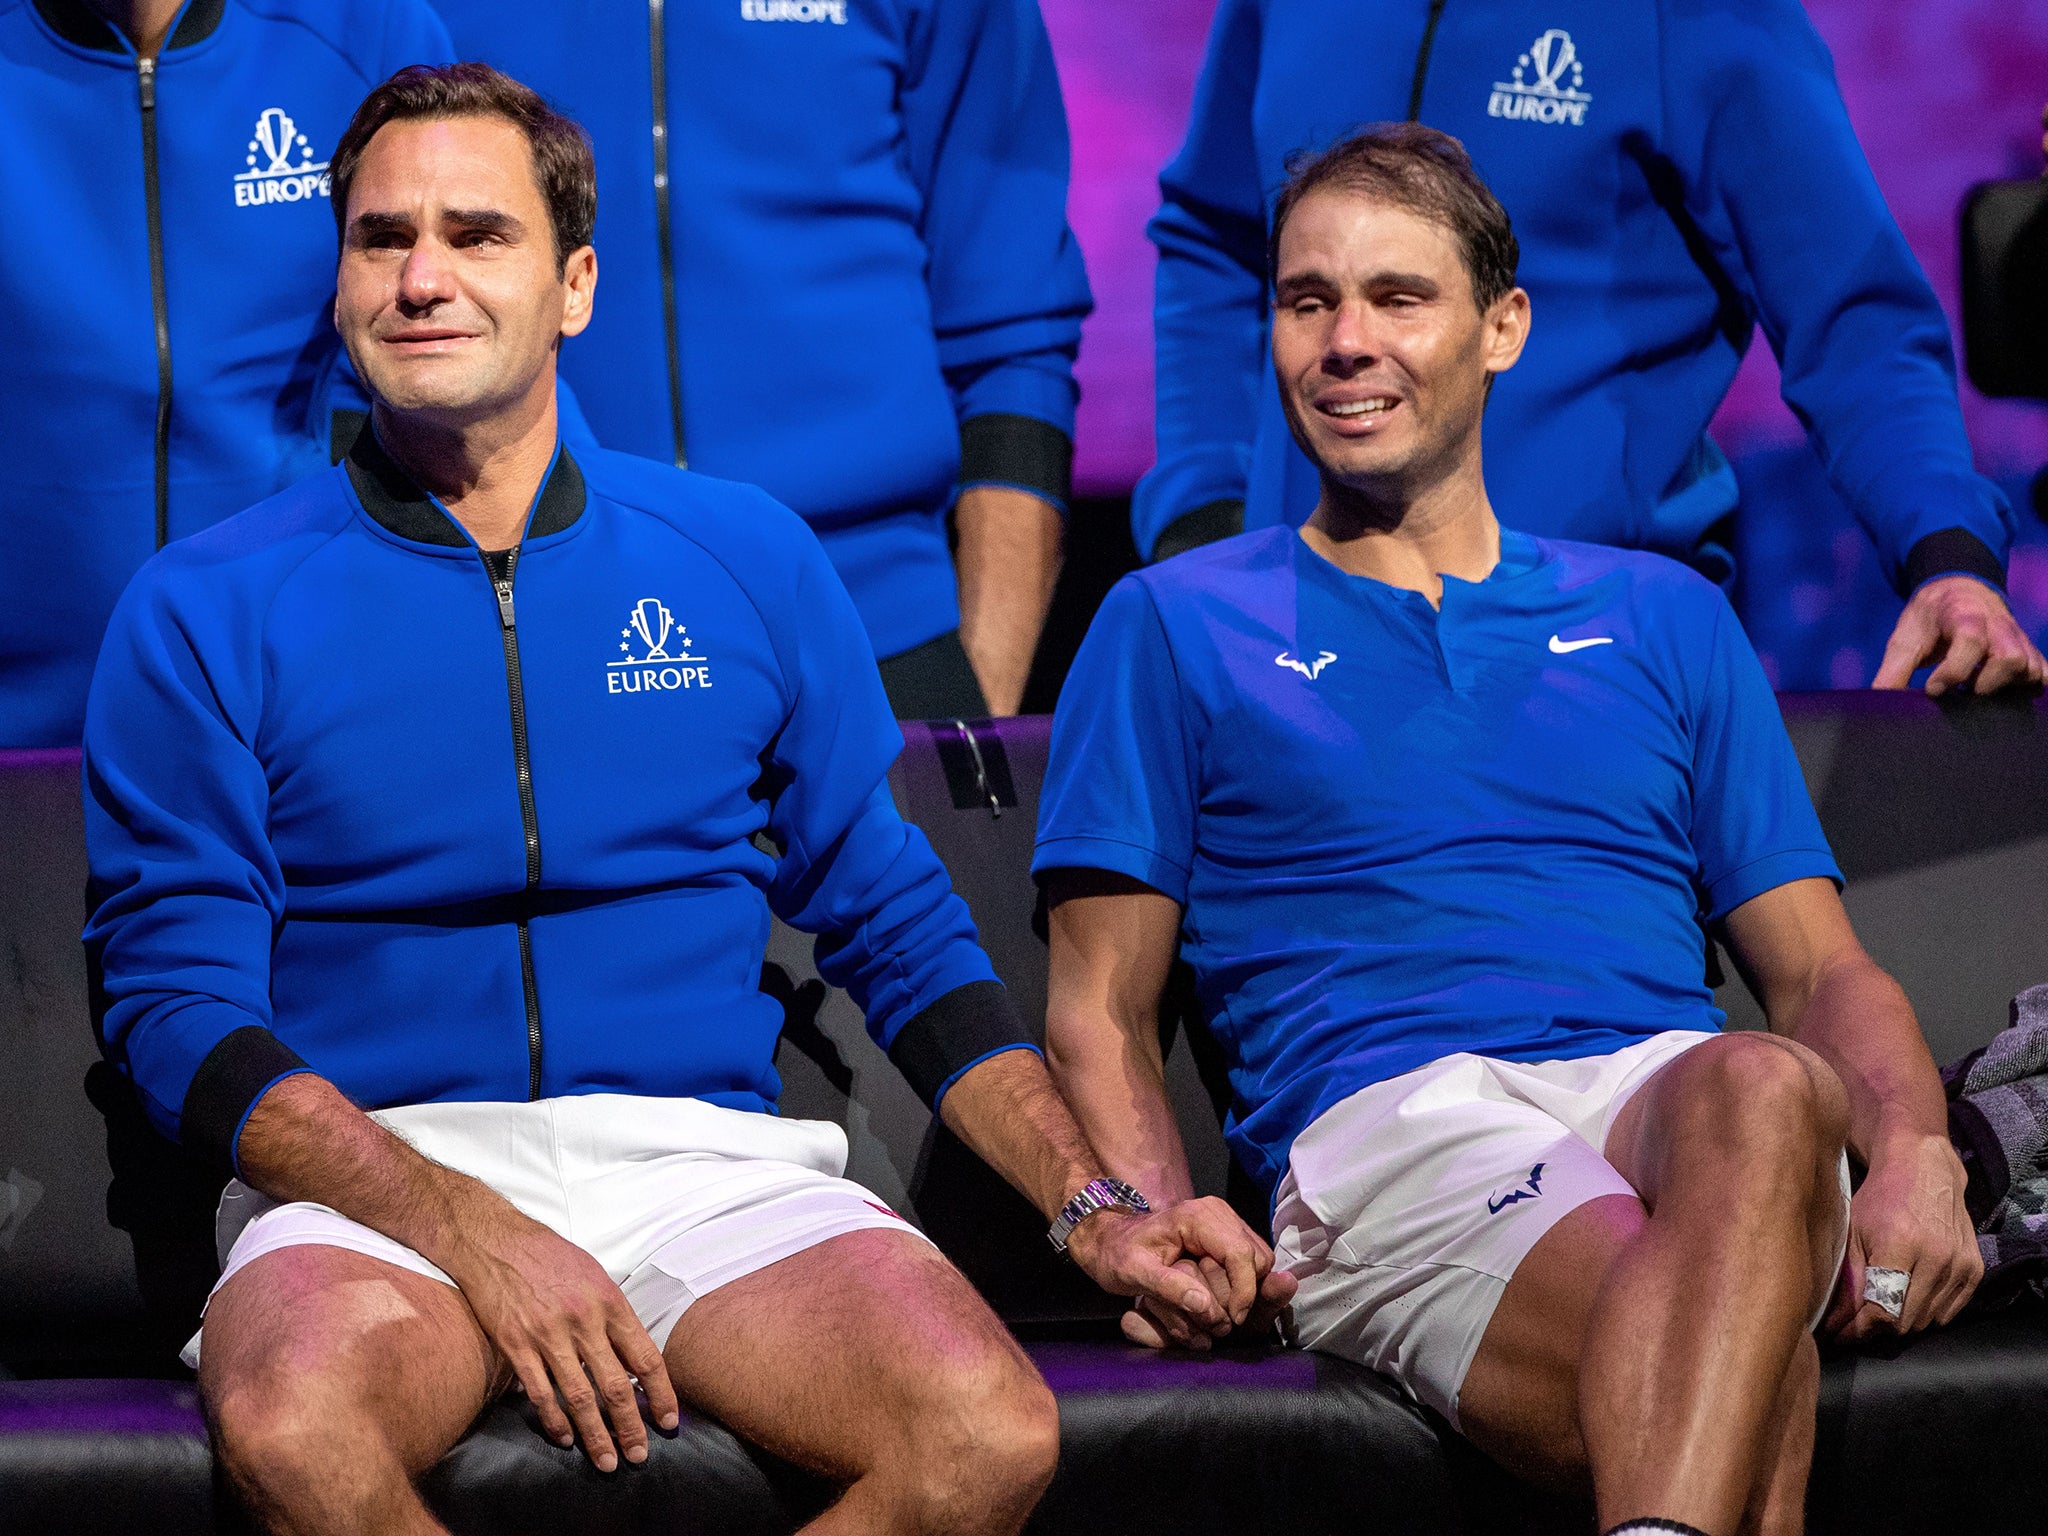 Roger Federer and Rafael Nadal friendship Why don’t more British men